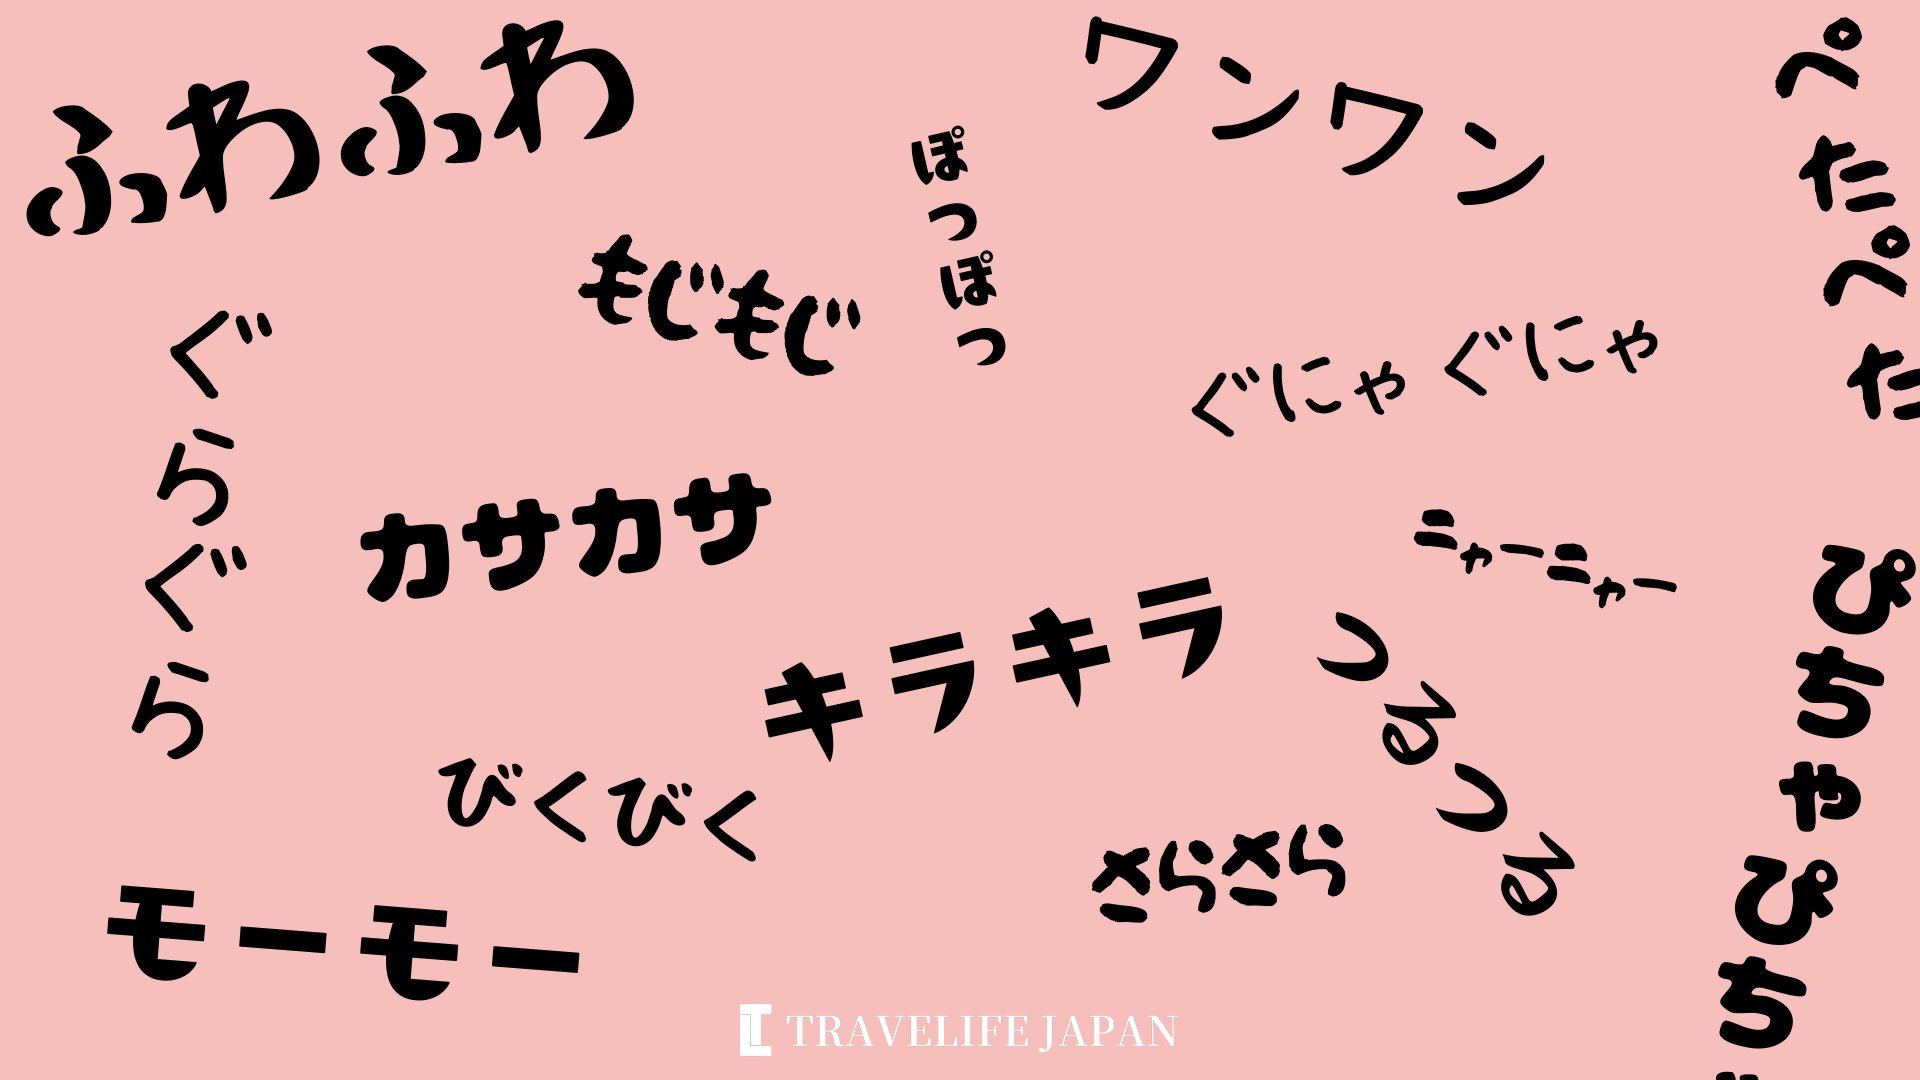 Travelife Japan_Onomatopoeia_1